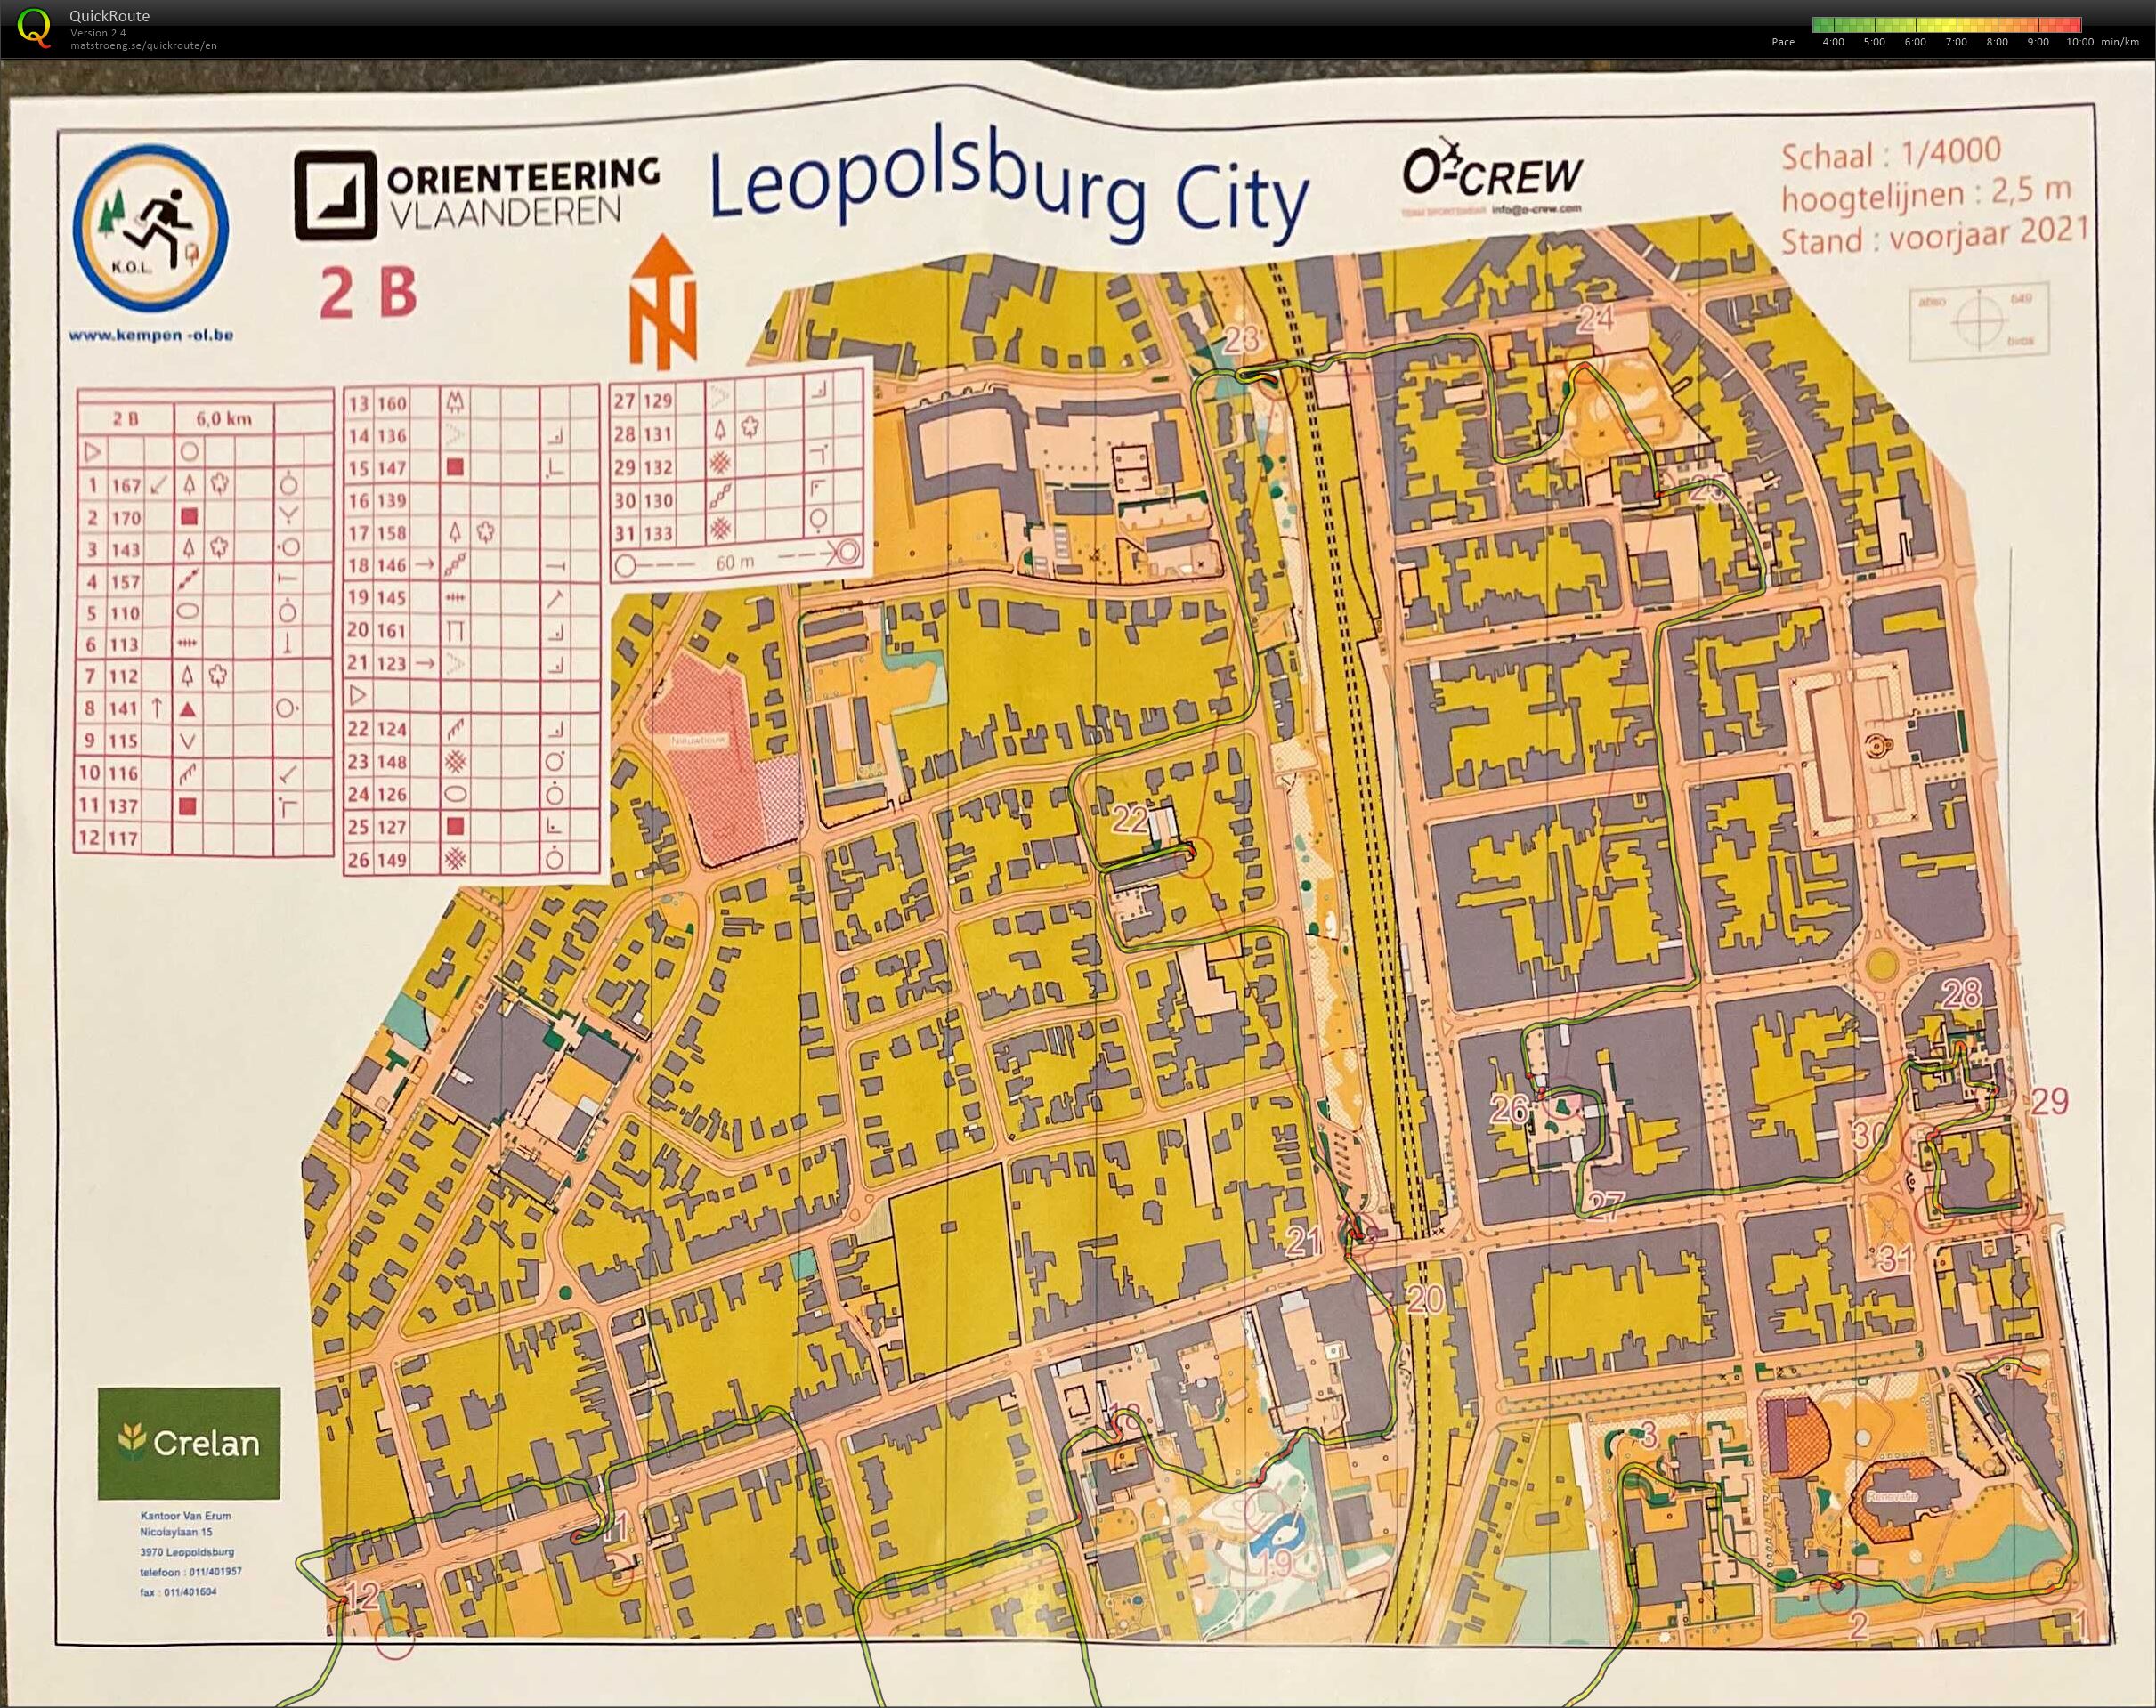 Leopoldsburg City - B (06-06-2021)